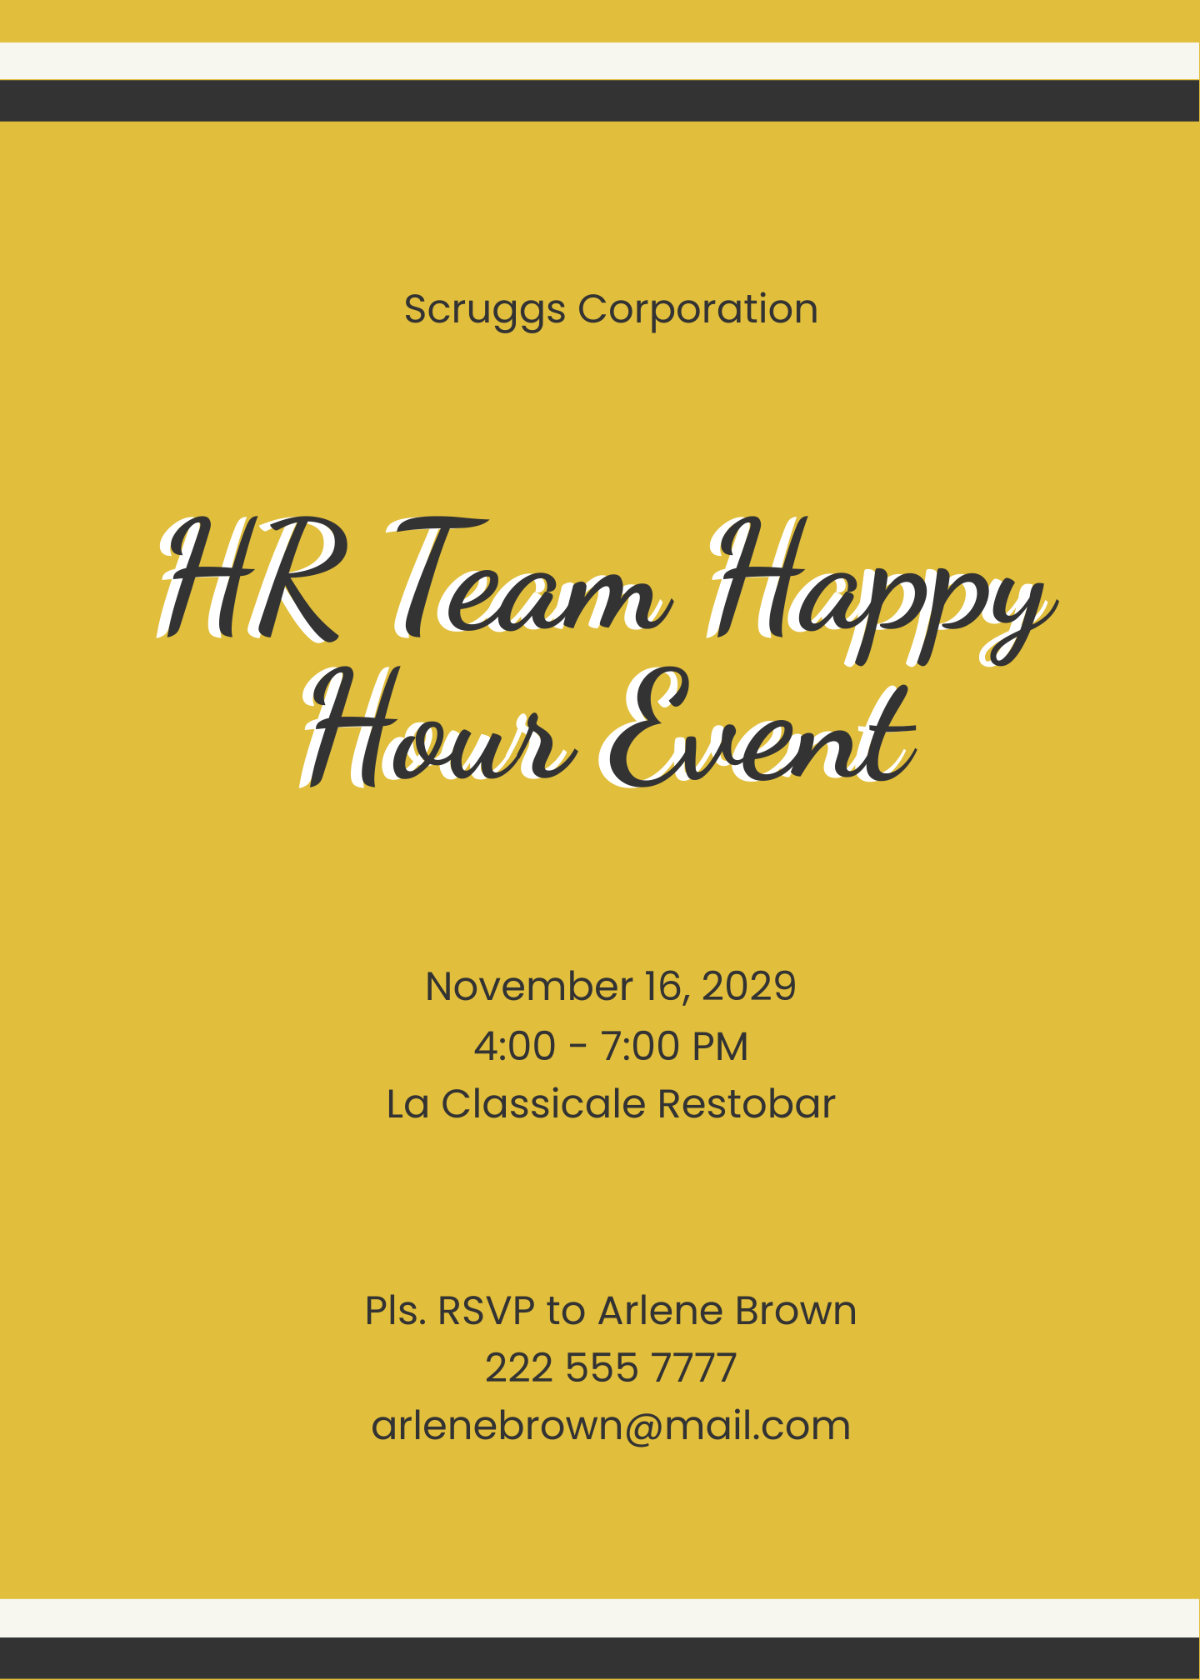 HR Happy Hour Invitation